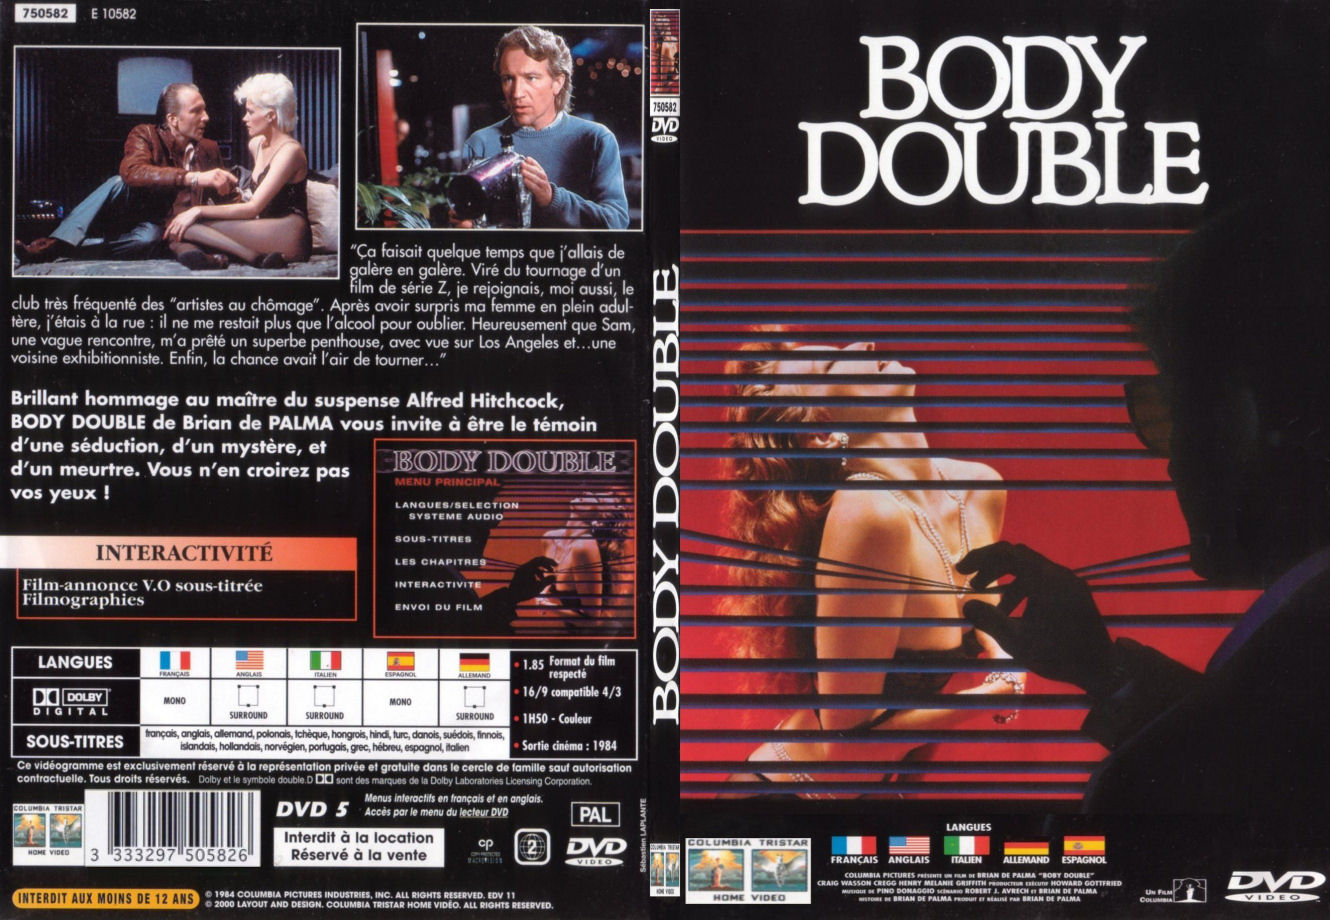 Jaquette DVD Body double - SLIM